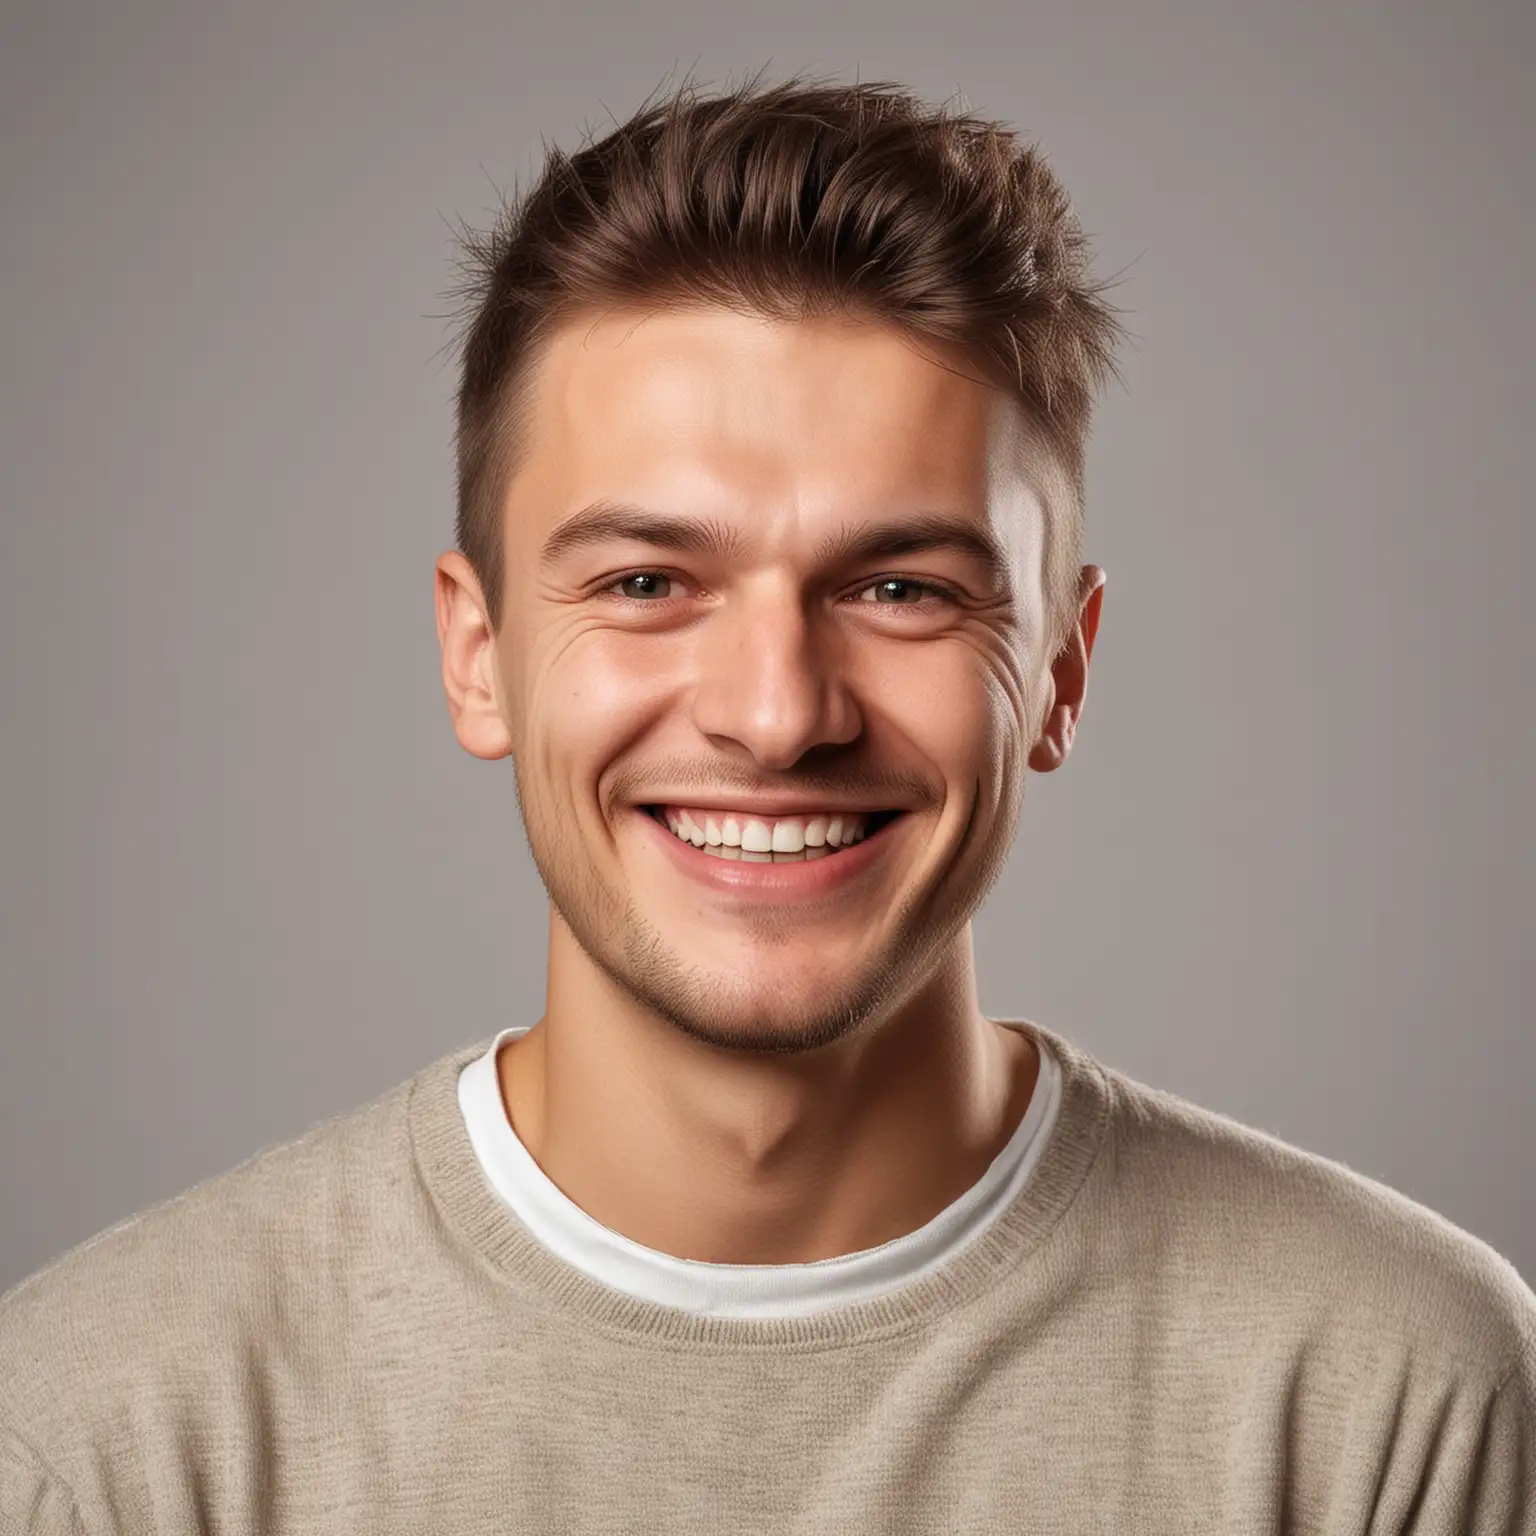 Smiling-Slavic-Man-on-Plain-Background-Real-Photo